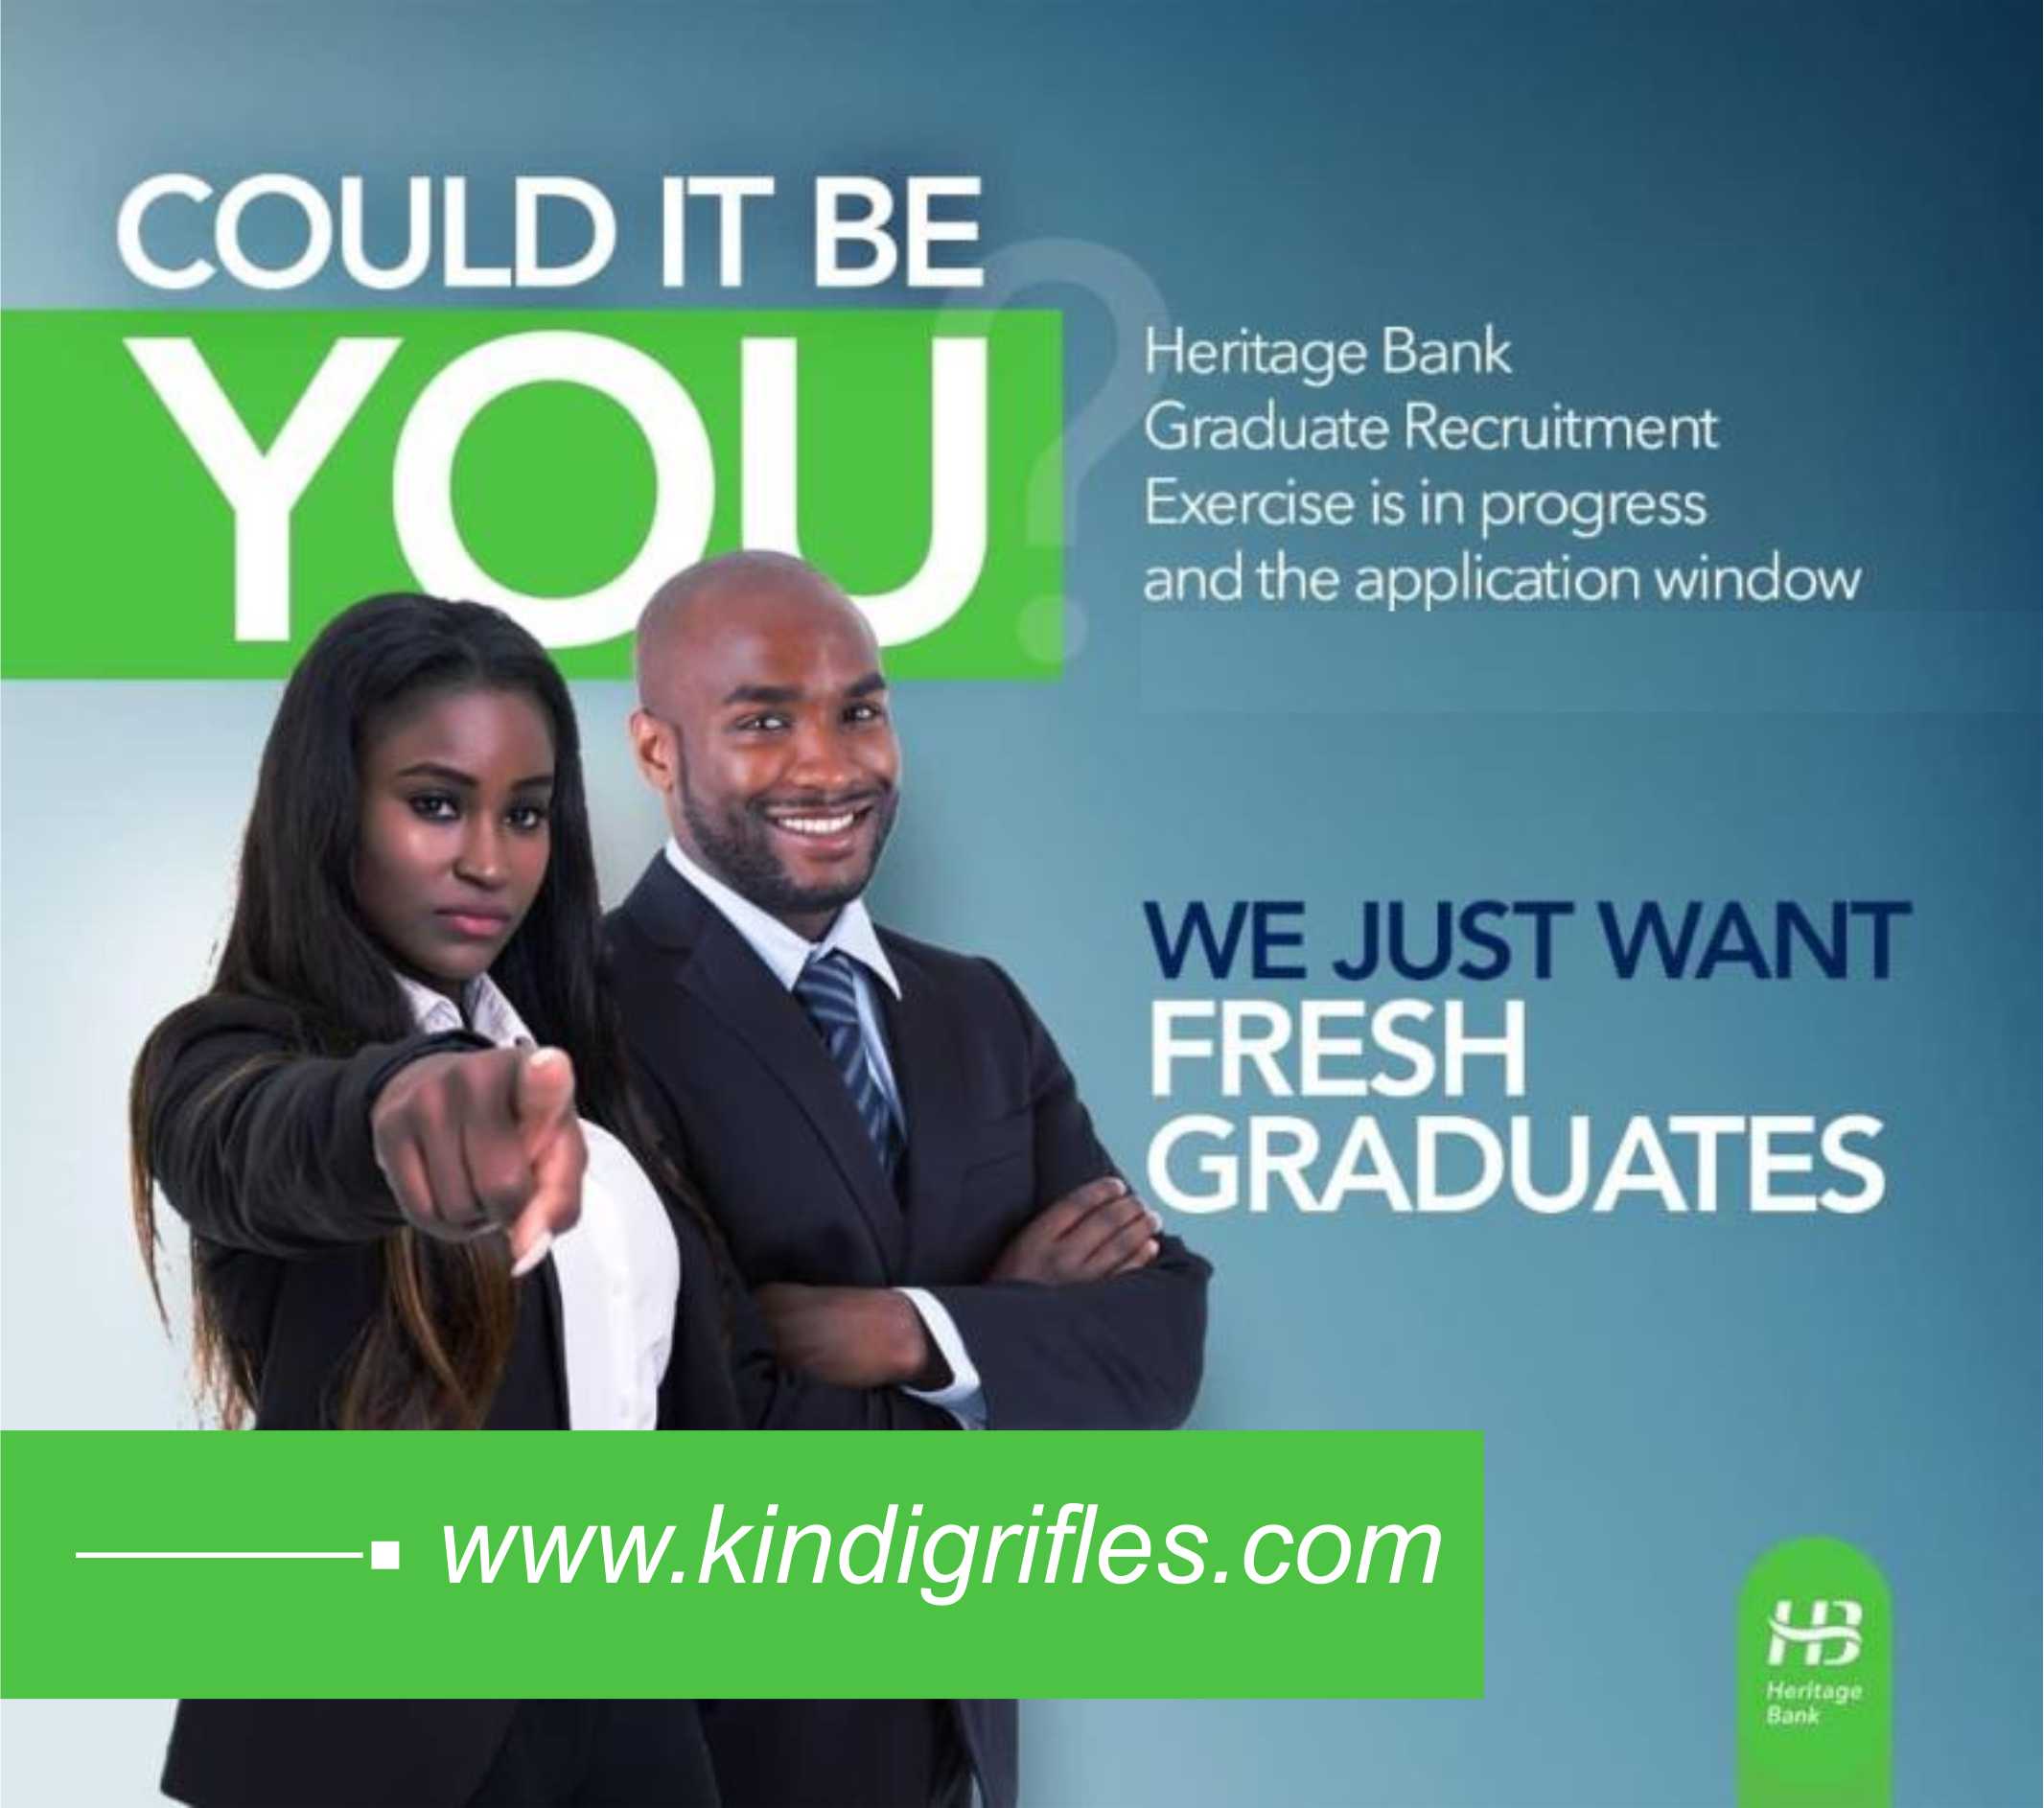 Heritage Bank Career Management